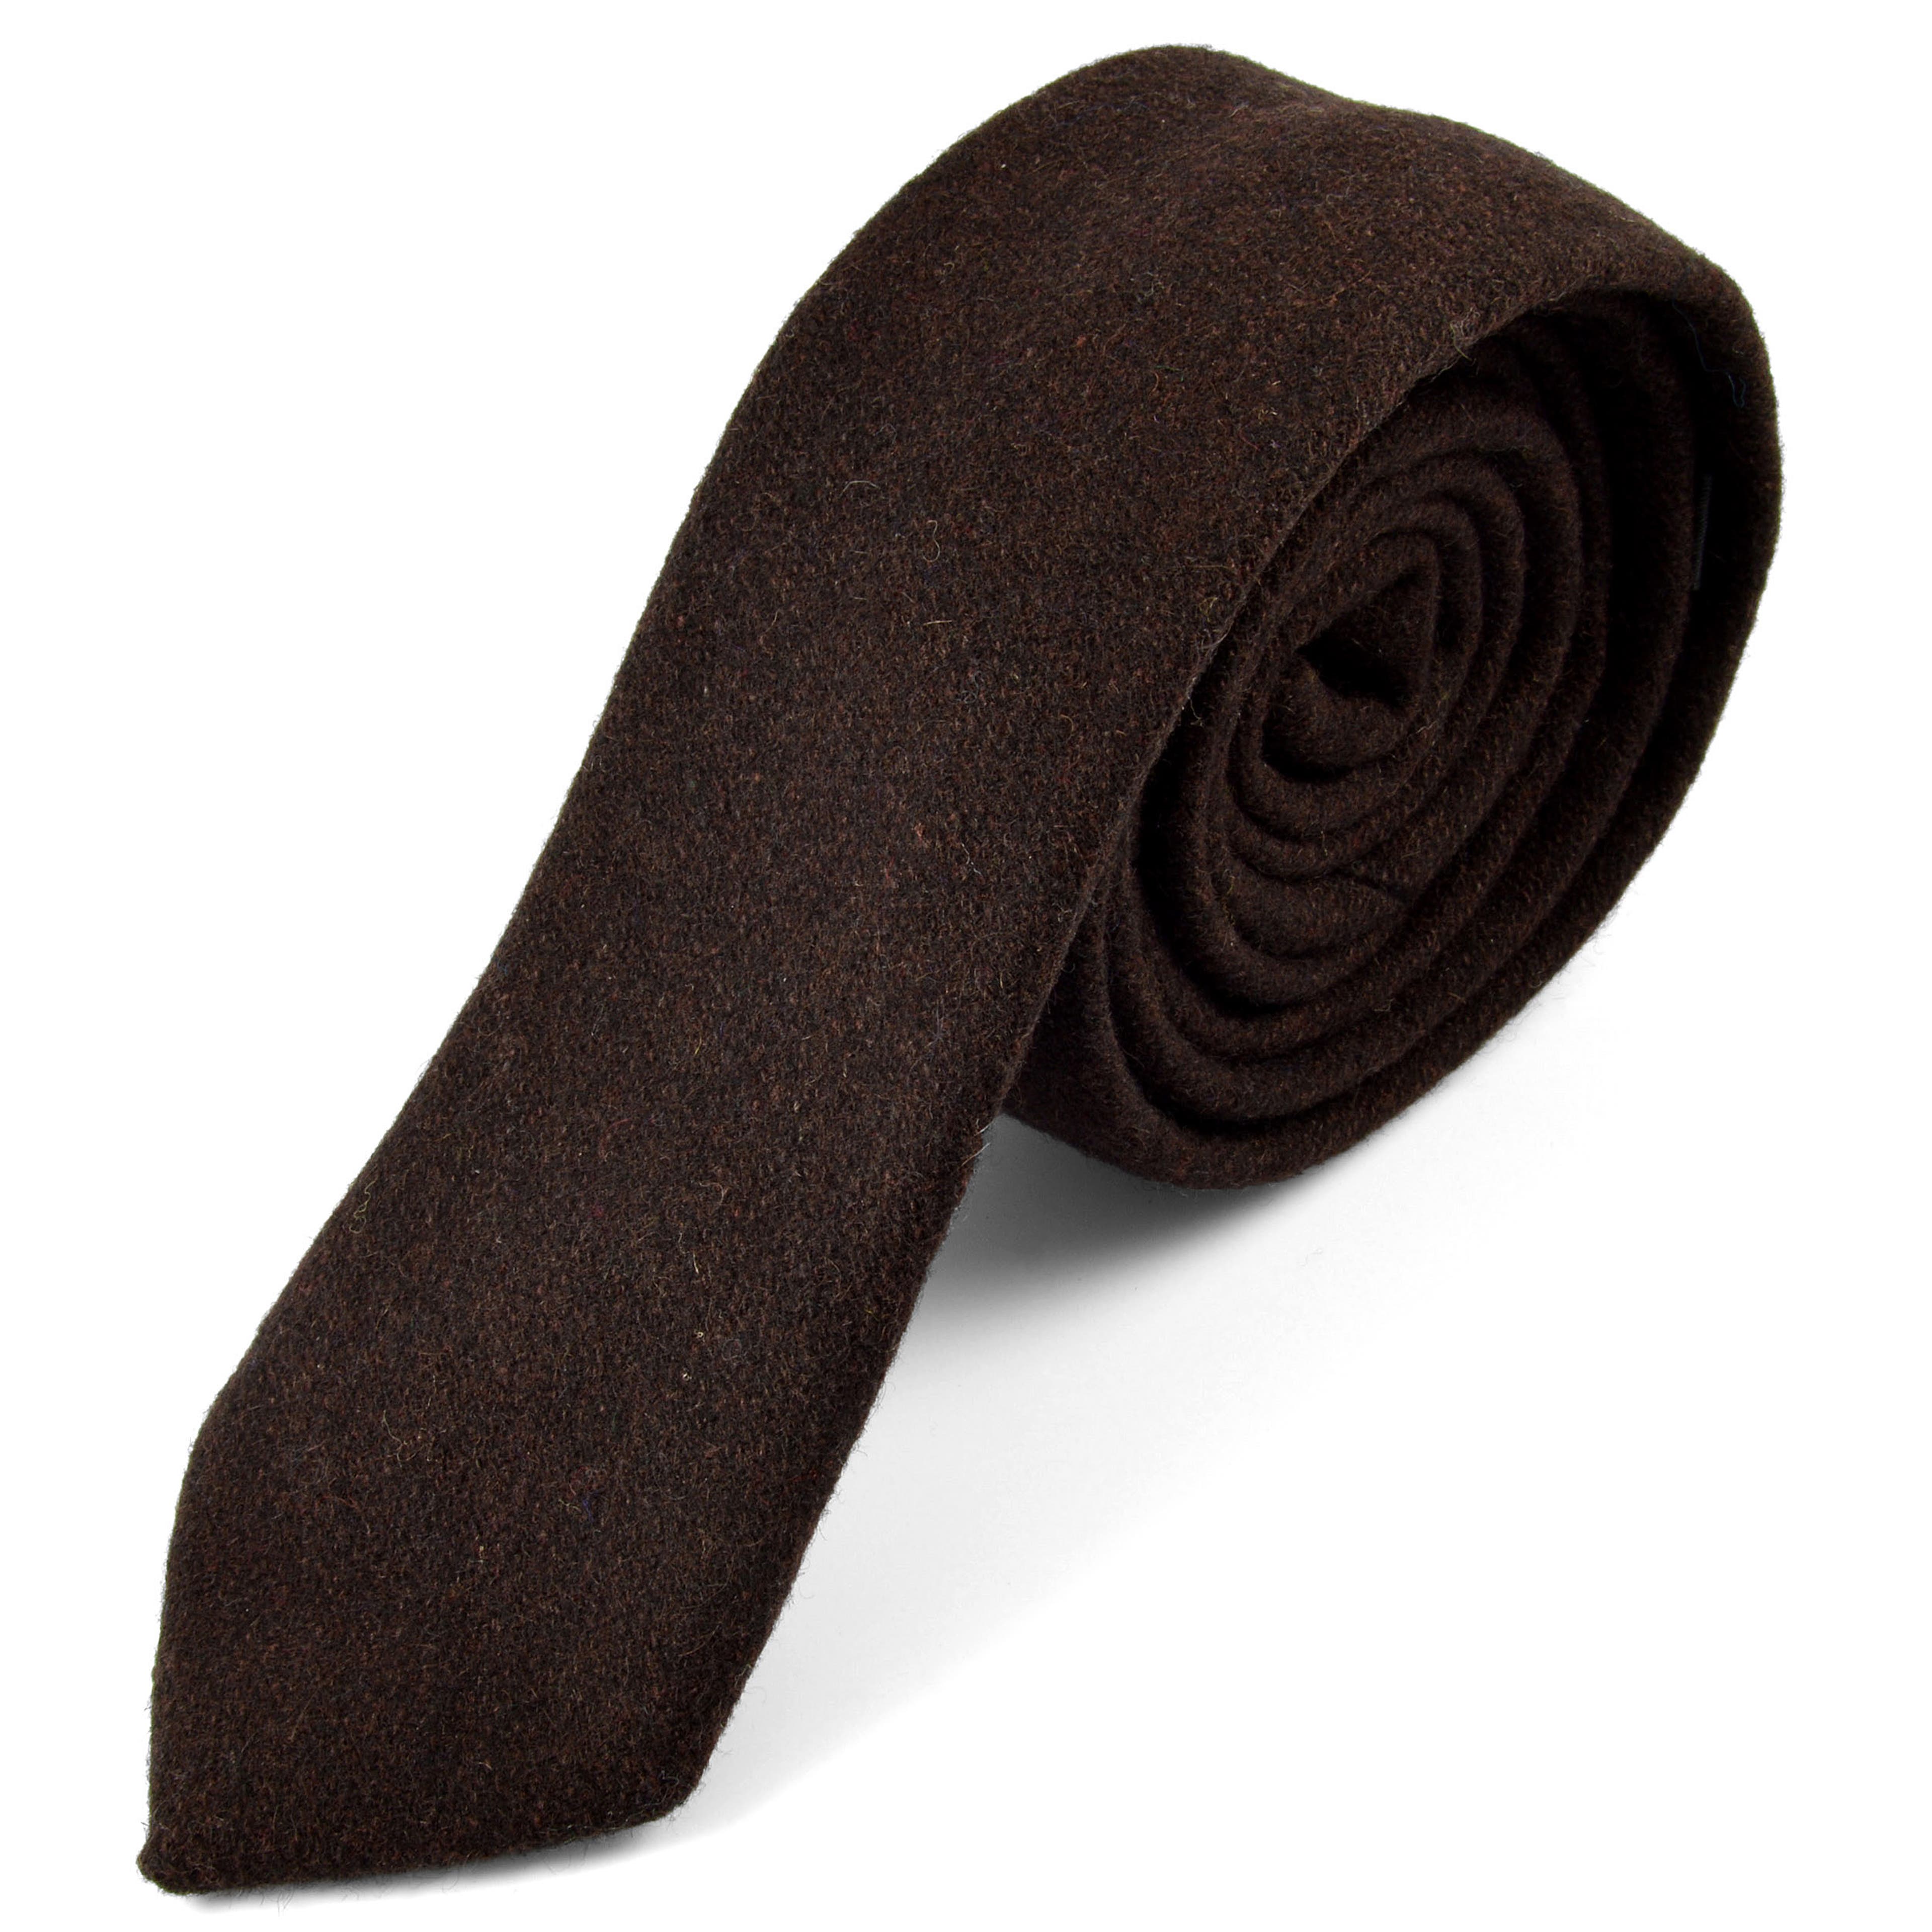 Cravate marron fait main